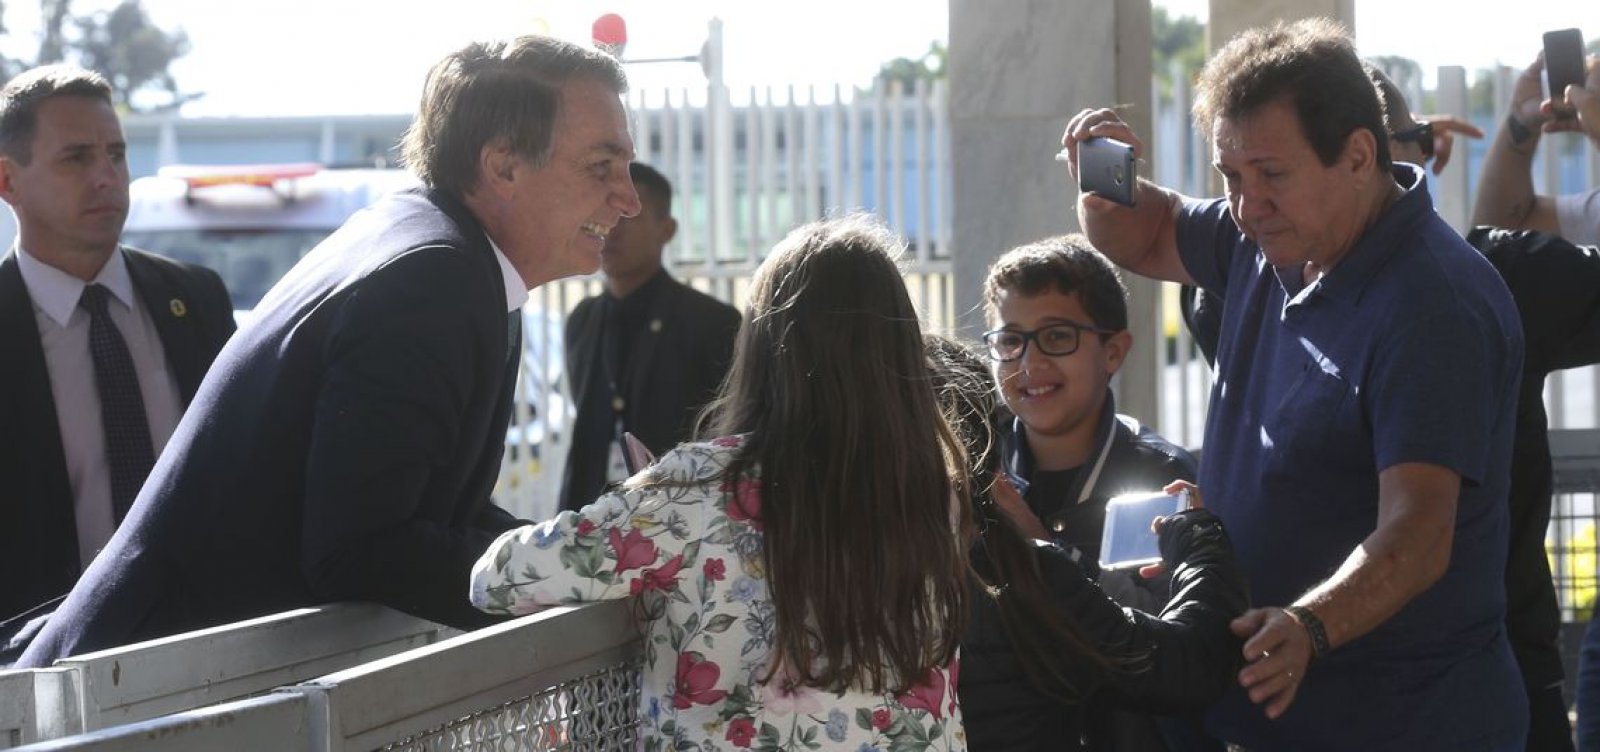 'Menina brinca de boneca e menino brinca de arminha', diz Bolsonaro